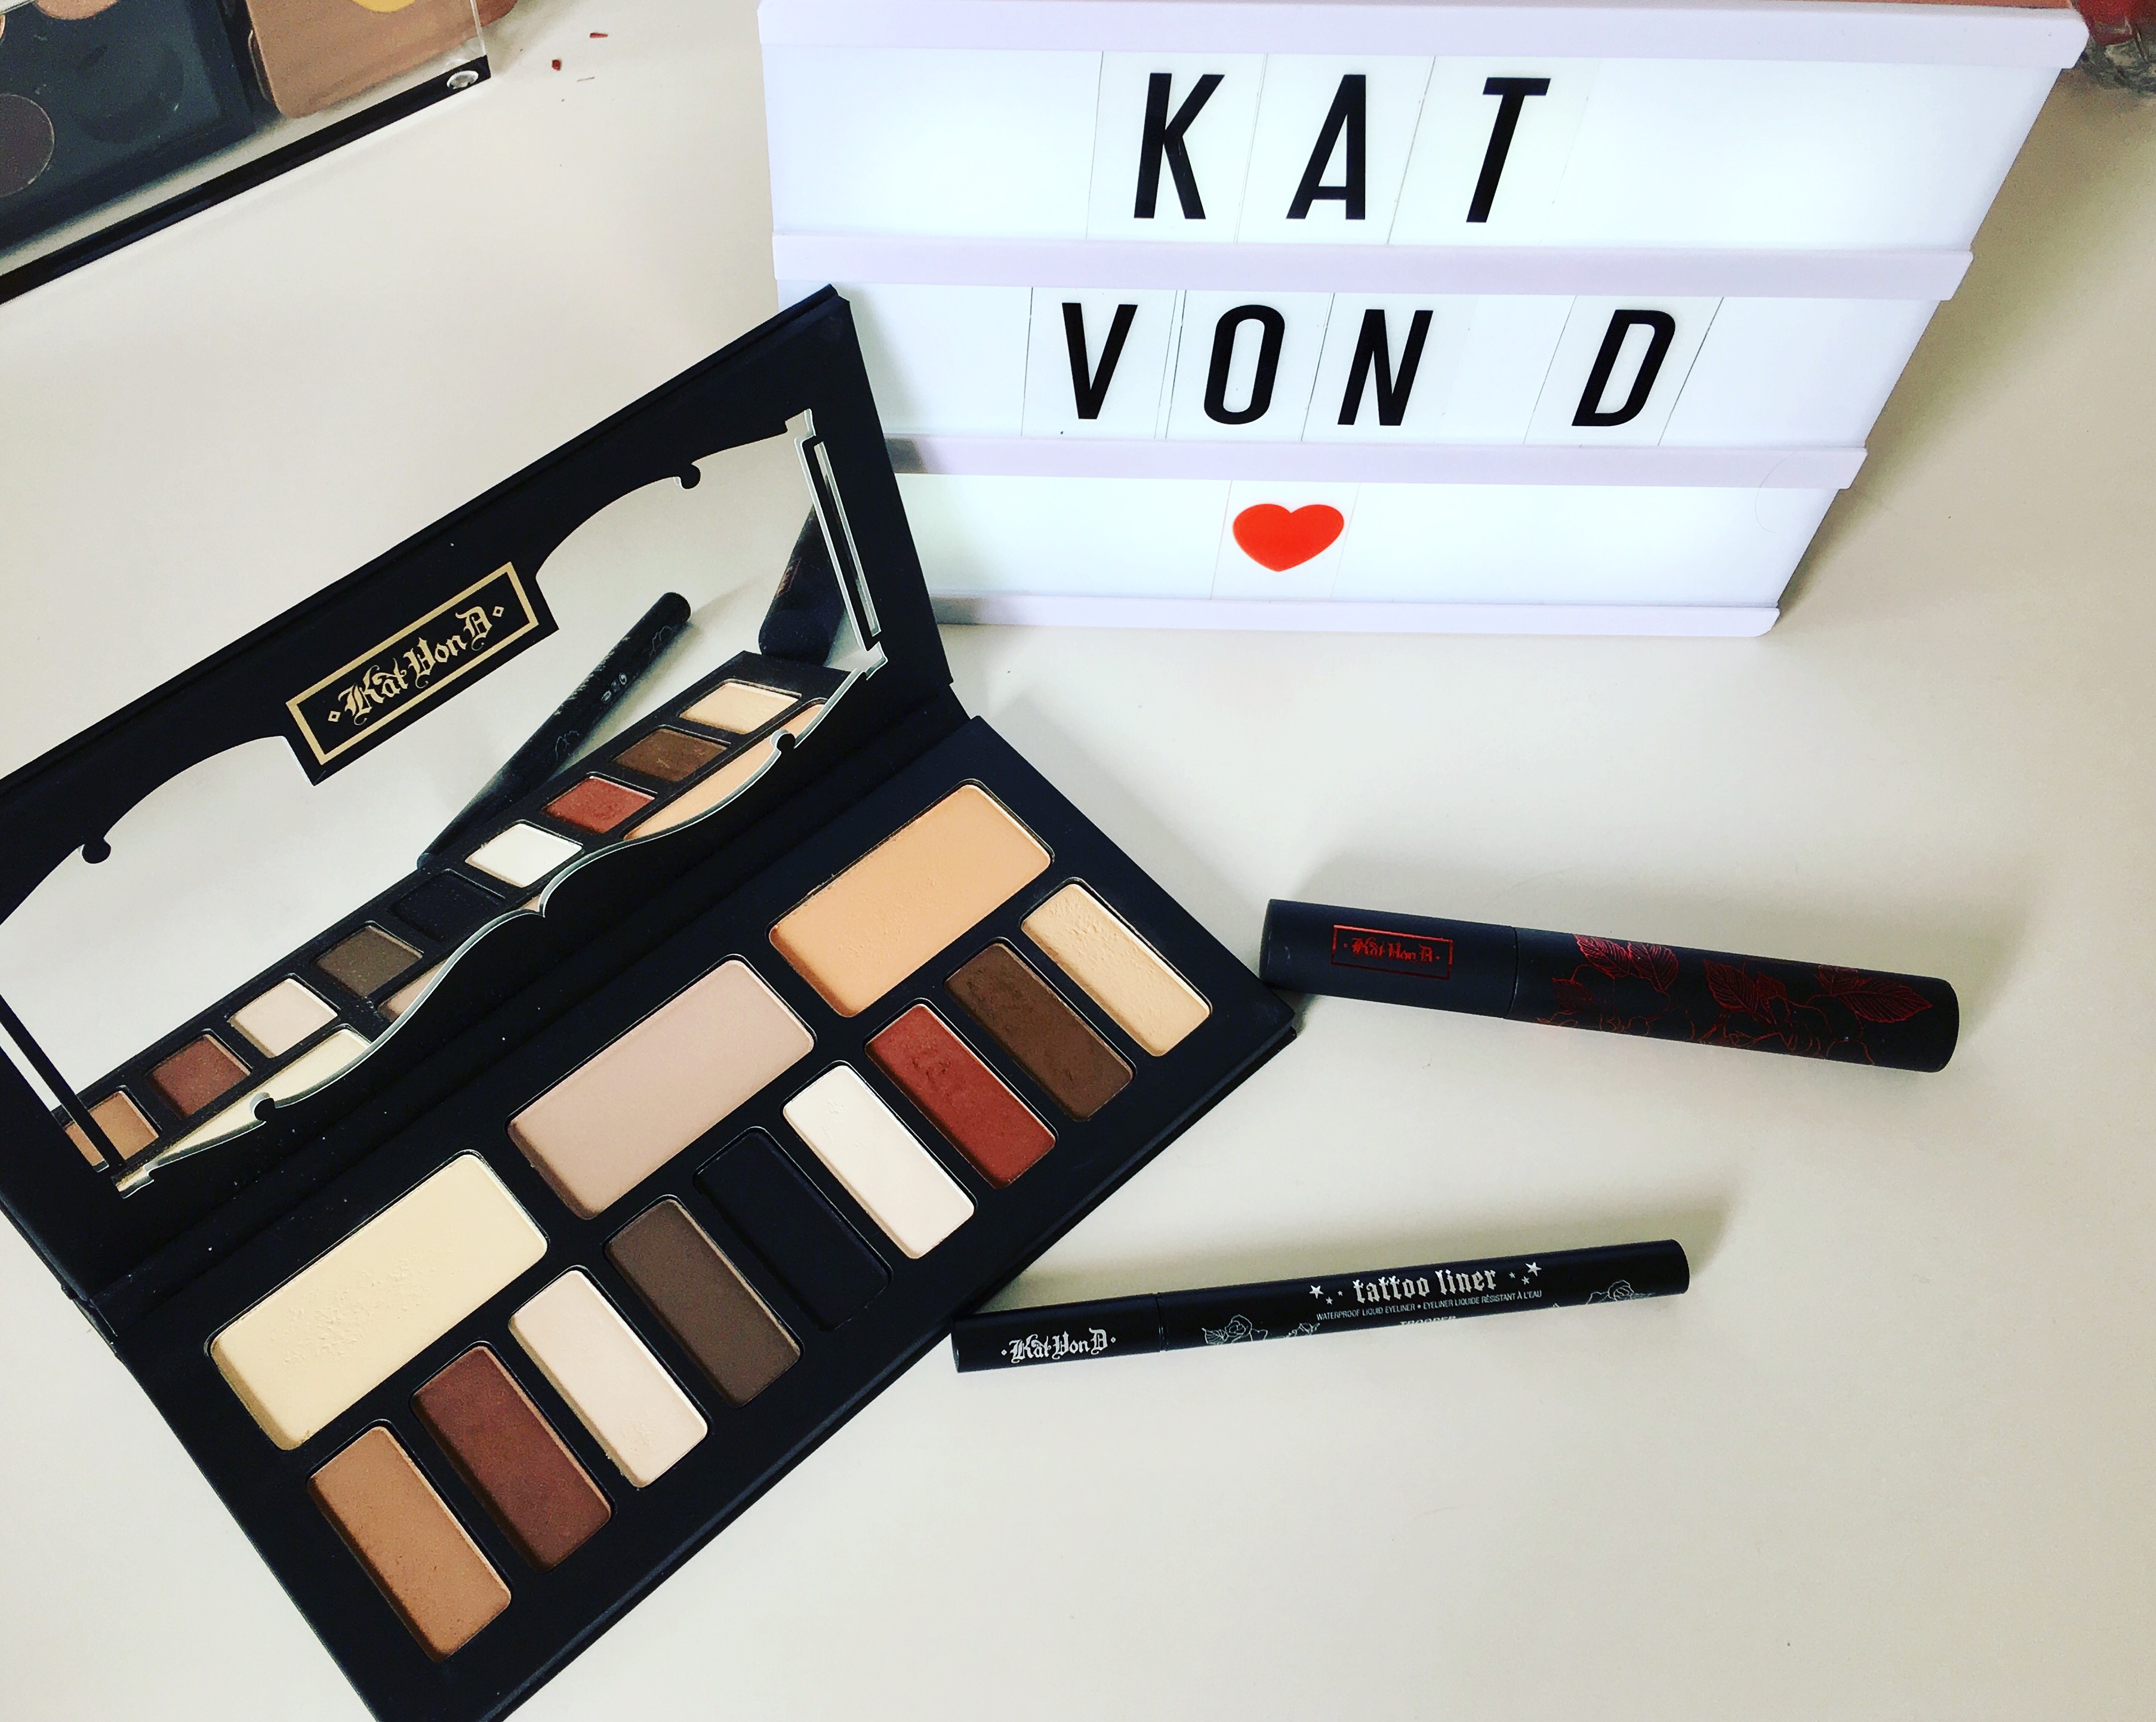 Kat Von D Beauty brand focus